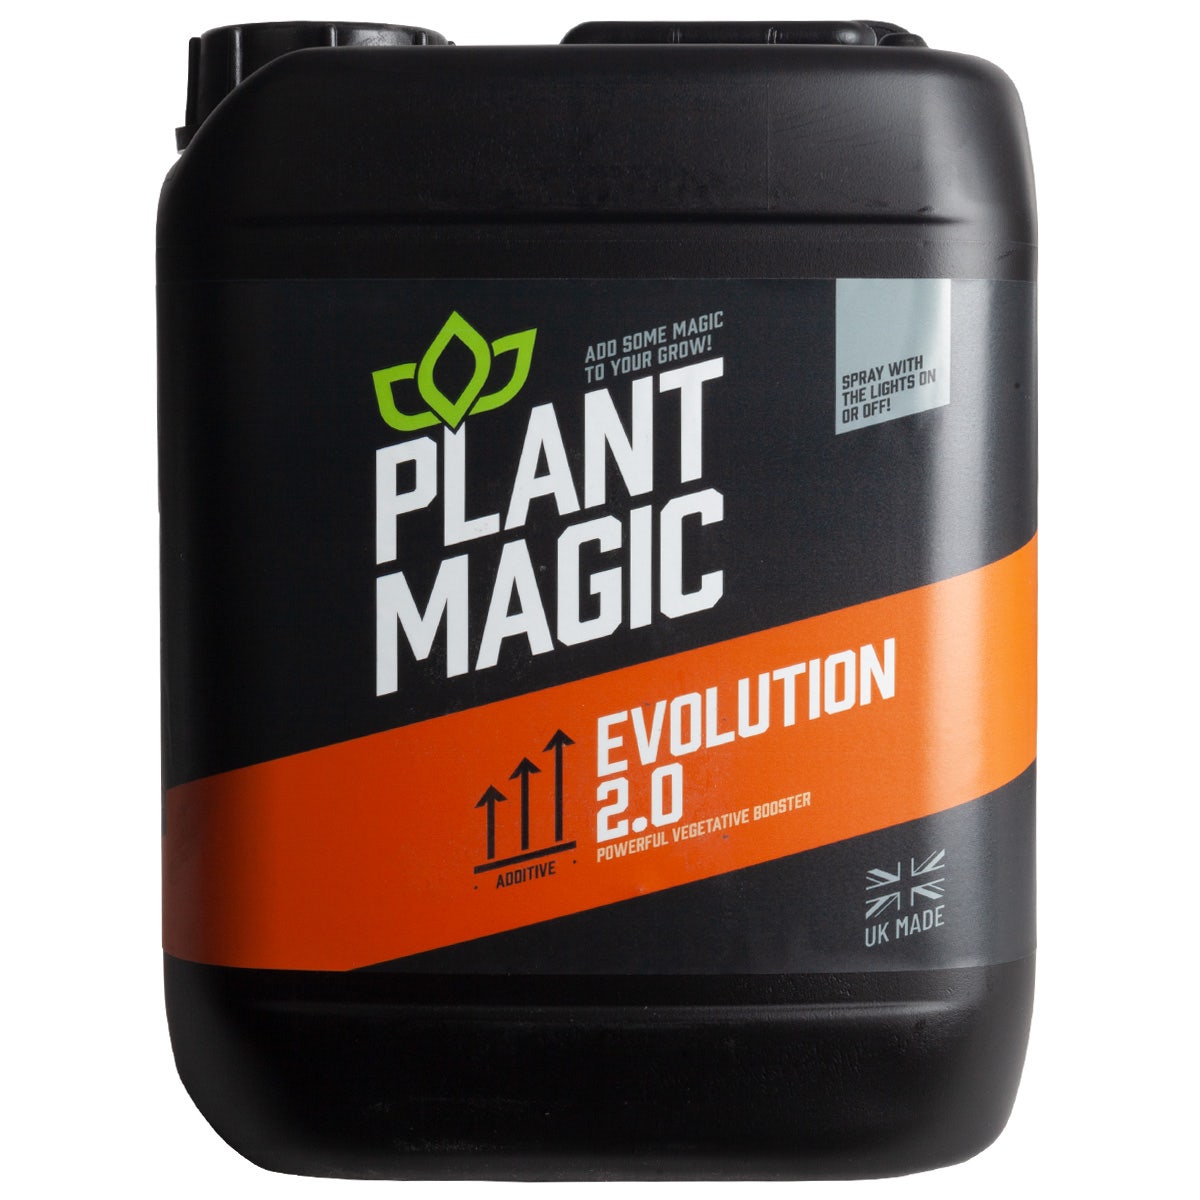 Plant Magic - Evolution 2.0 Spray